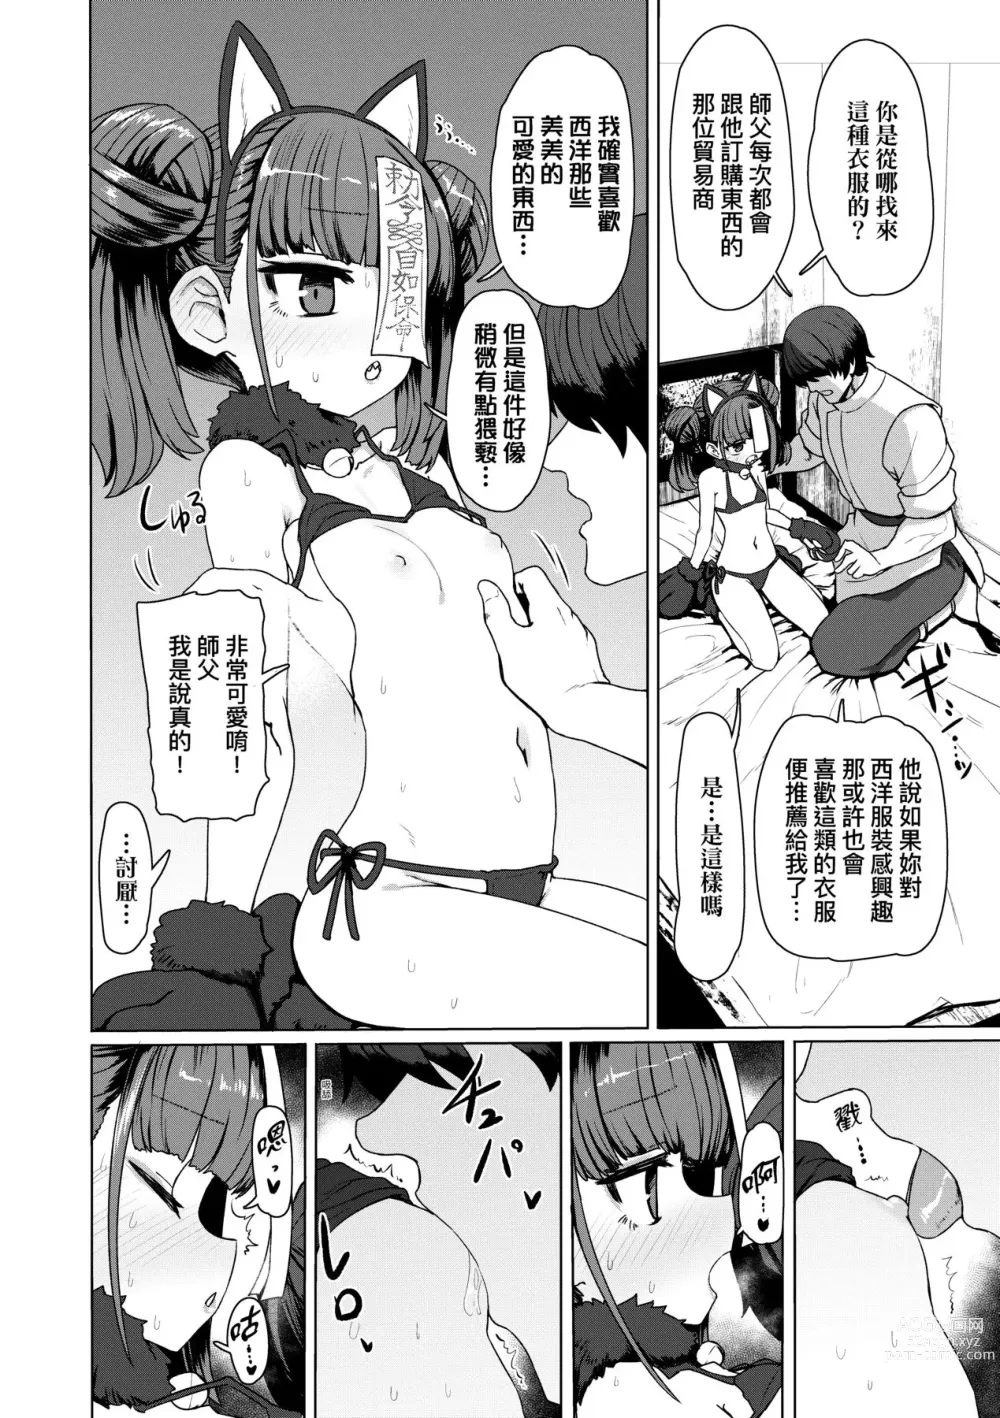 Page 191 of manga 即墮落蘿莉永遠娘 (decensored)